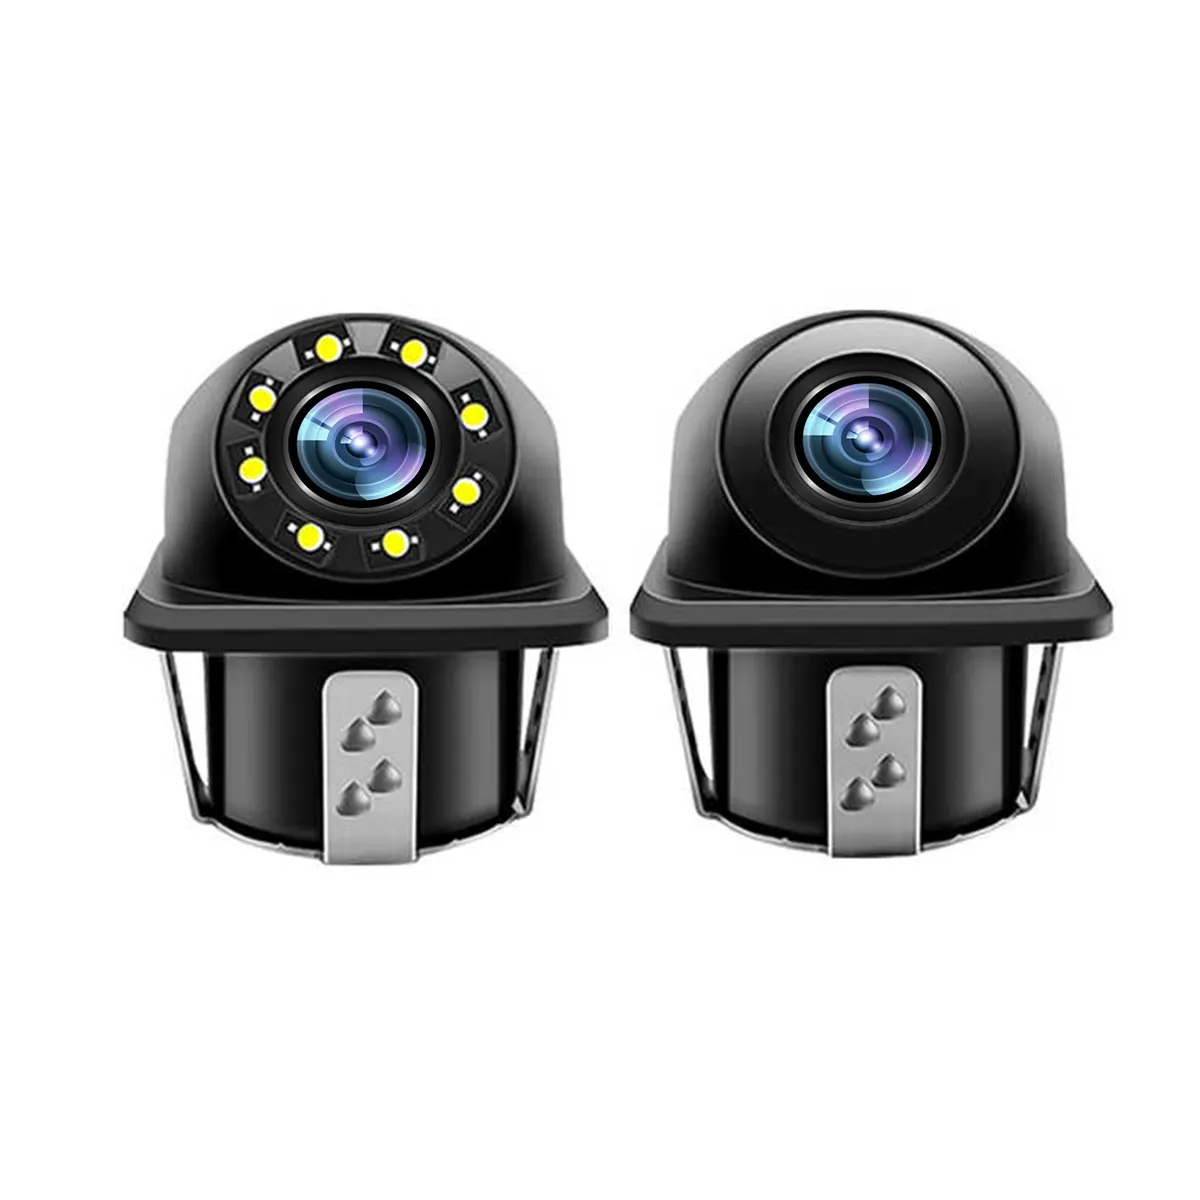 Kamera tampilan belakang mobil Universal, HD CCD 4 LED penglihatan malam 120-170 derajat sudut lebar IP67 tahan air kamera mundur mobil